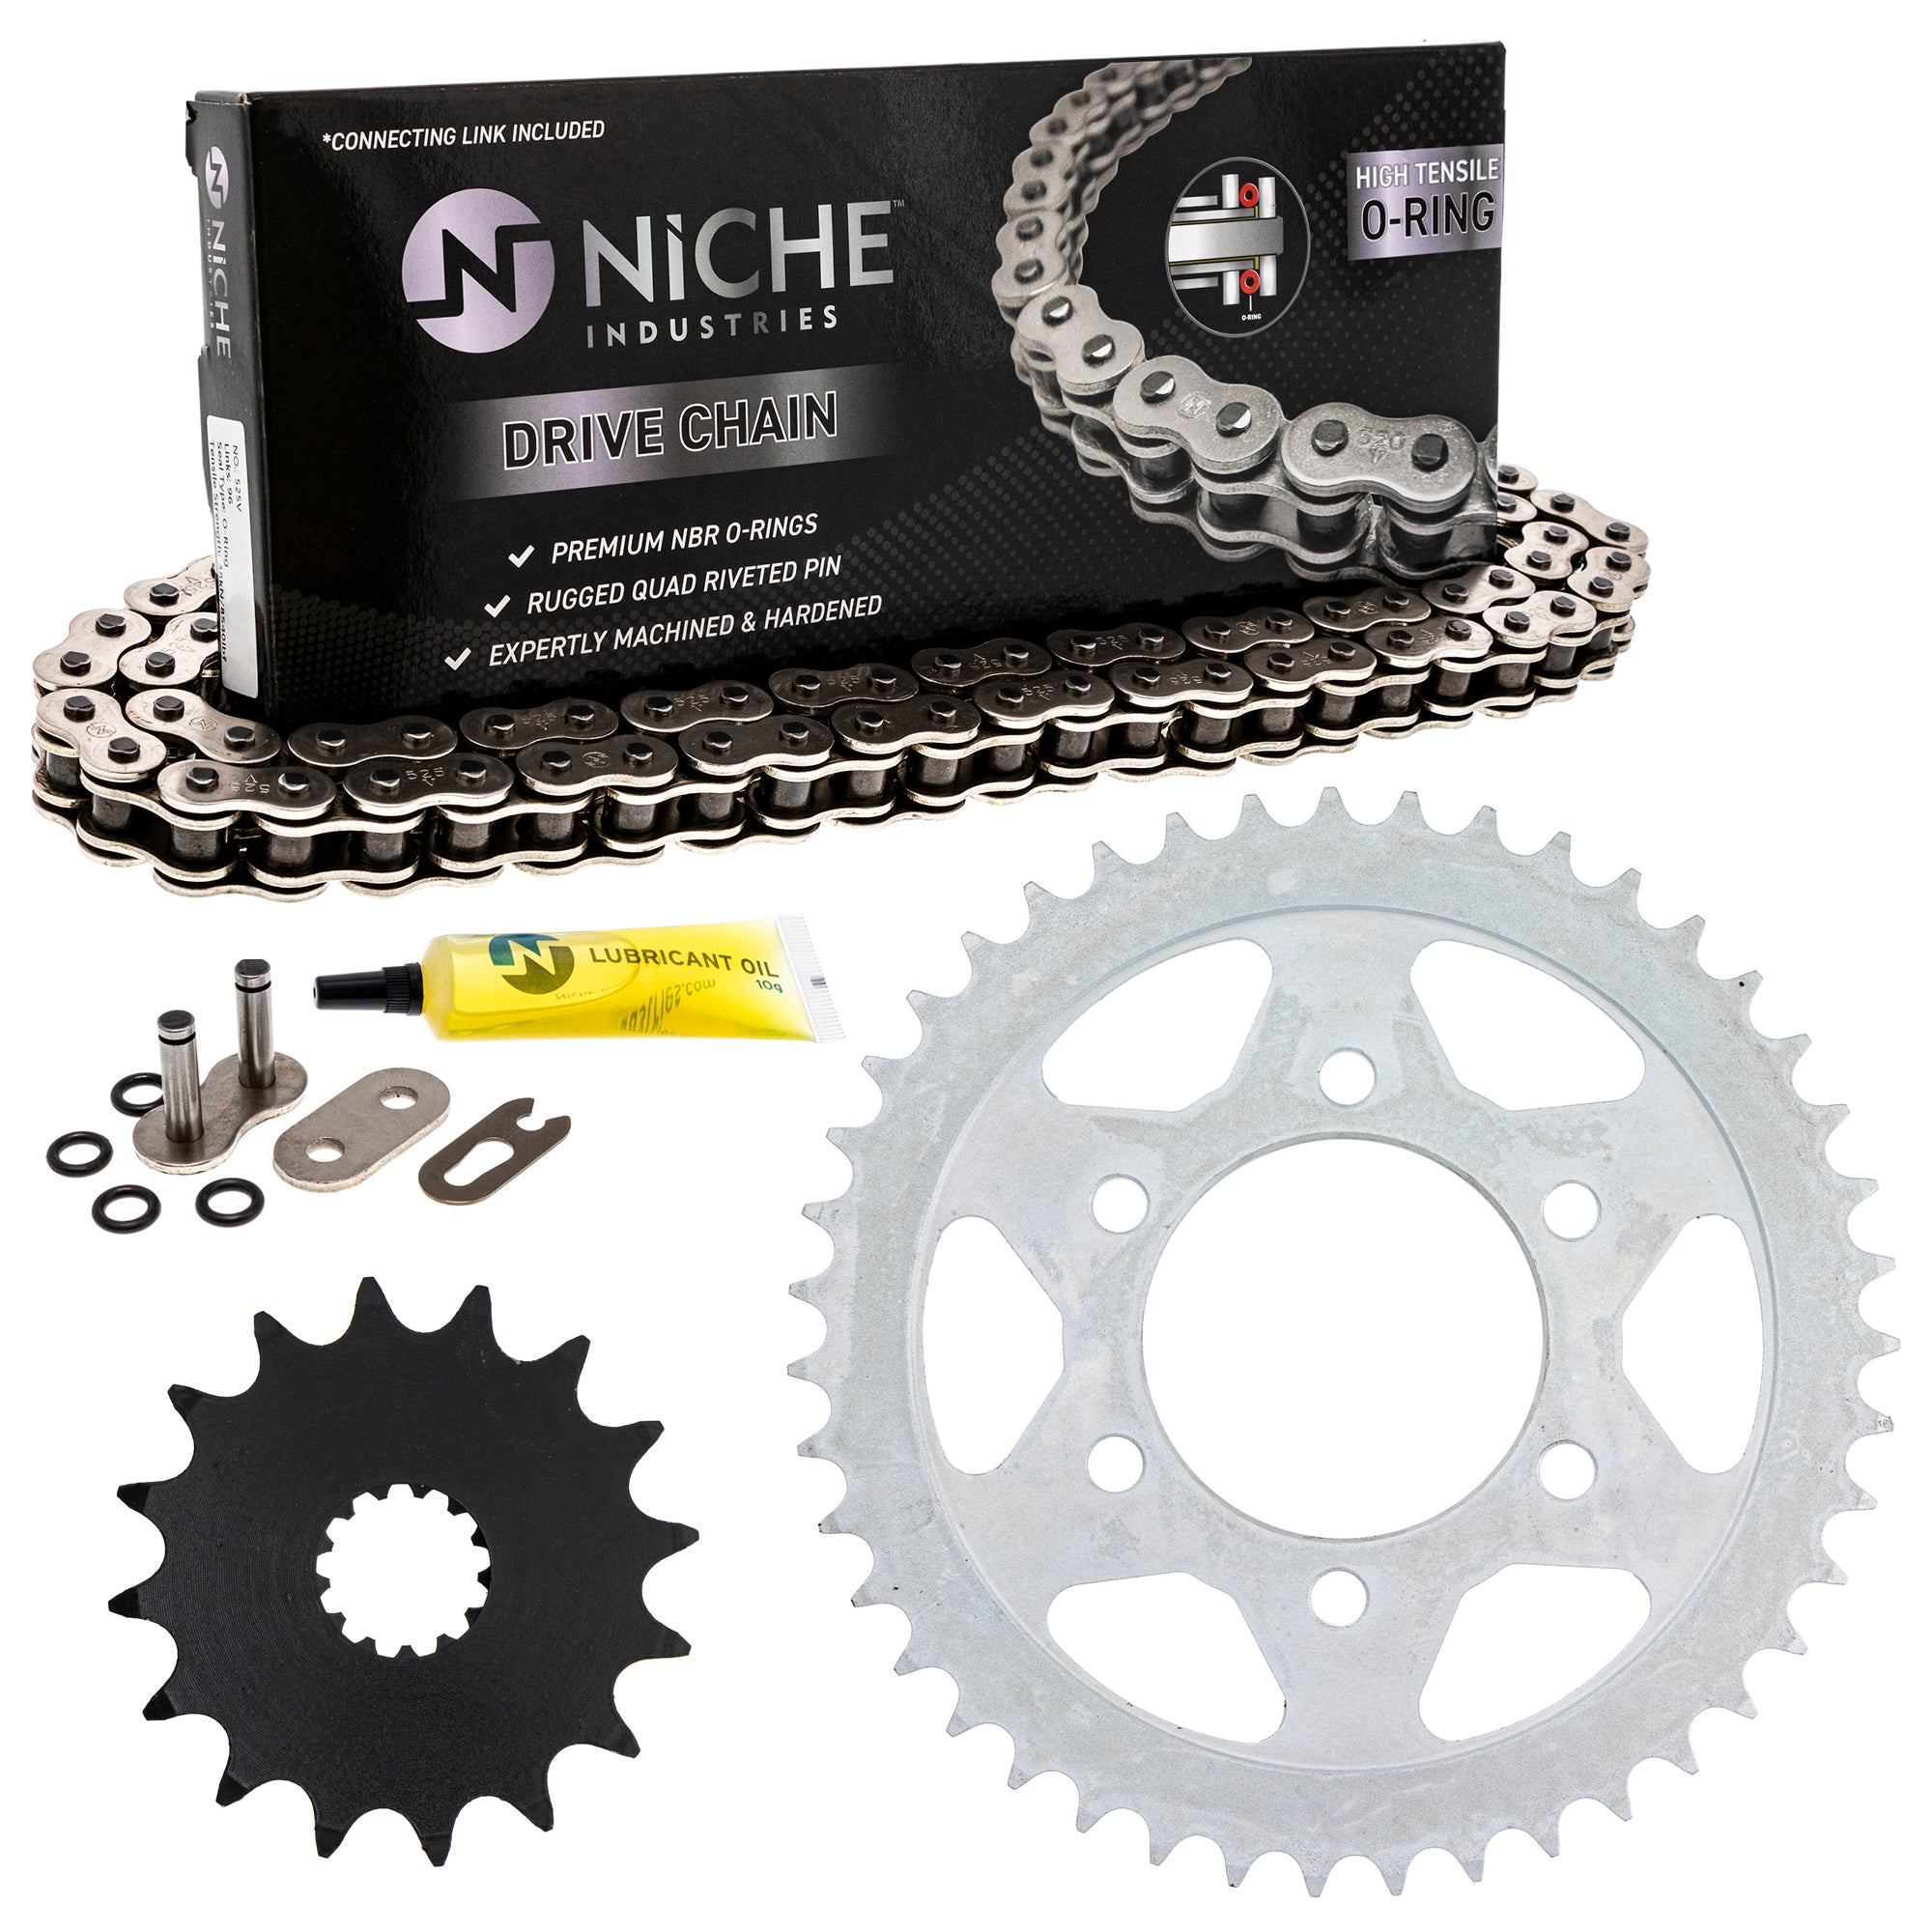 Drive Sprockets & Chain Kit for zOTHER Ninja 519-KCS0800K-K001 NICHE MK1004328